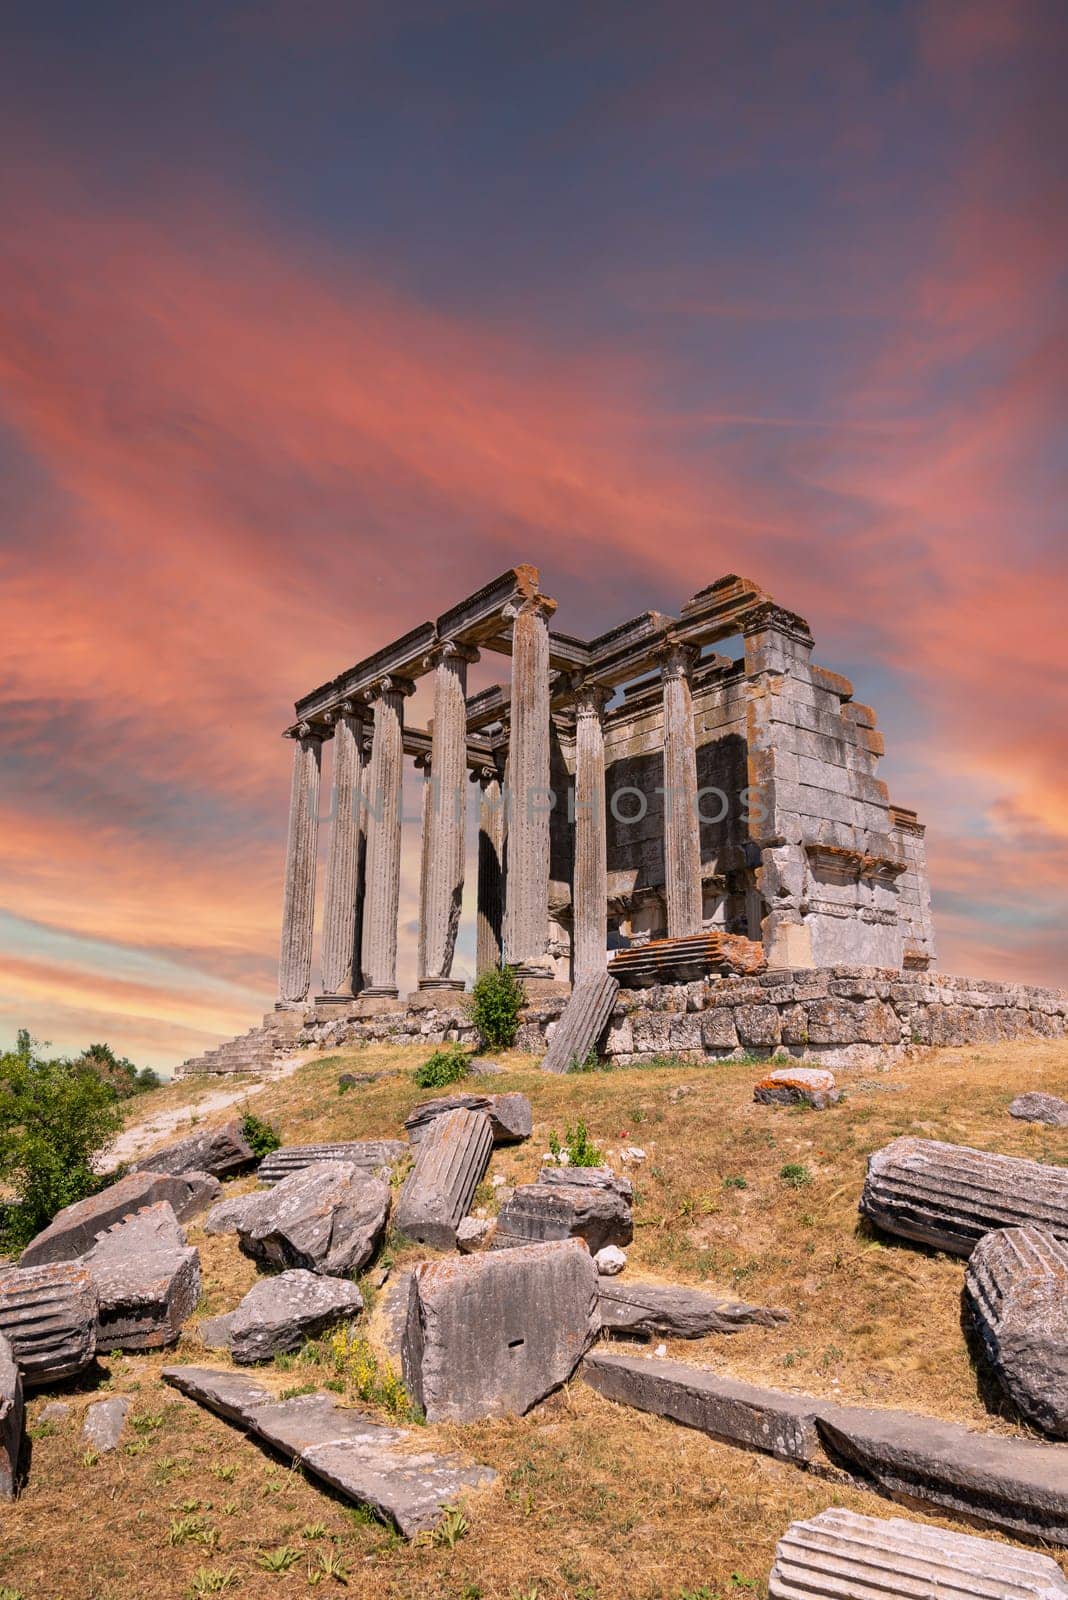 Zeus temple in the ancient city of Aizanoi in Kütahya Turkey